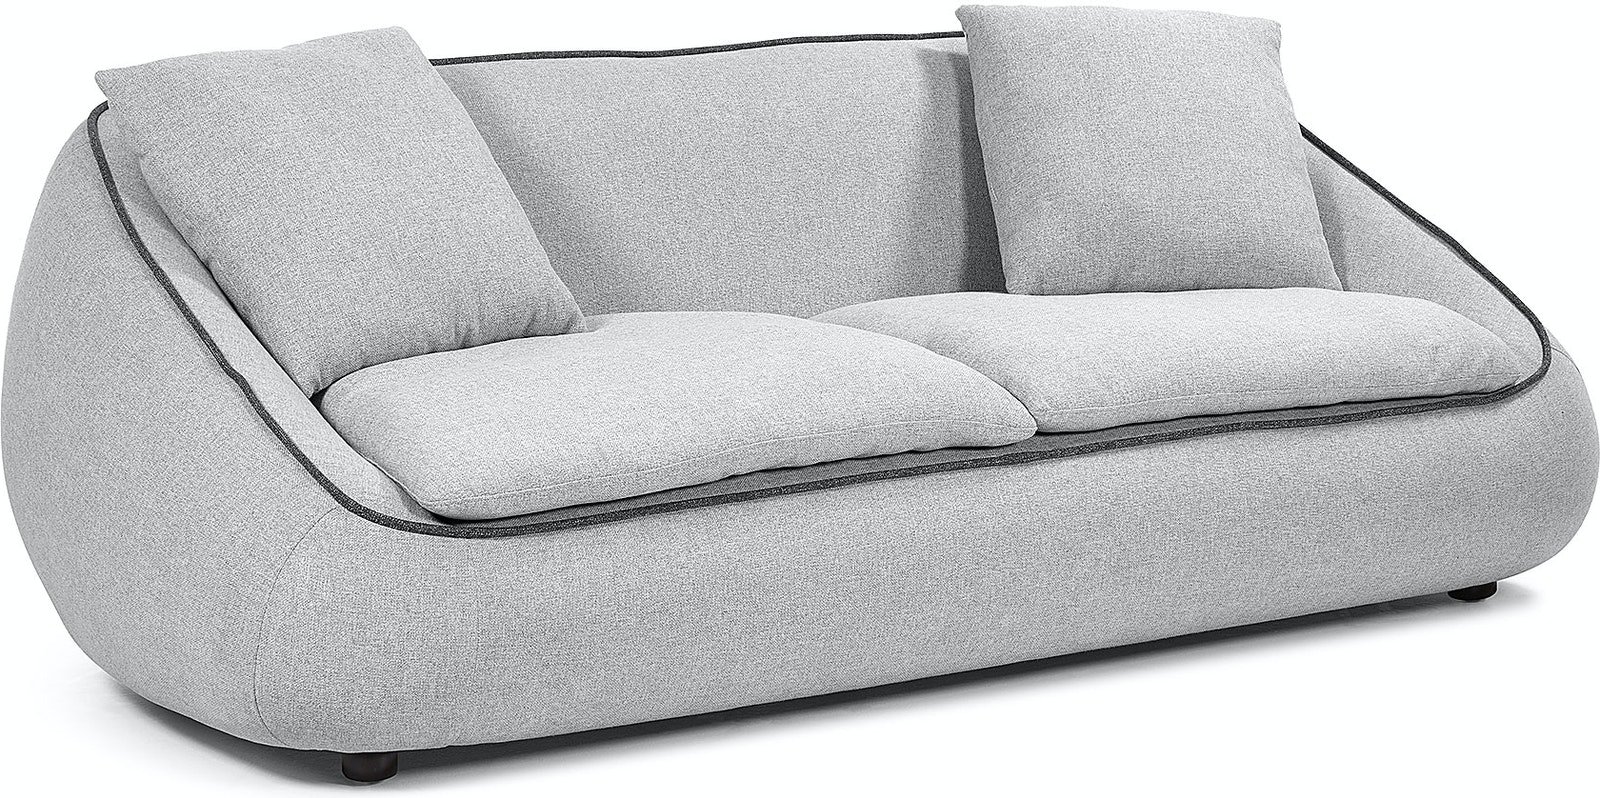 Safira, 3-personers sofa, moderne, stof by LaForma (H: 75 cm. B: 220 cm. L: 100 cm., Grå)